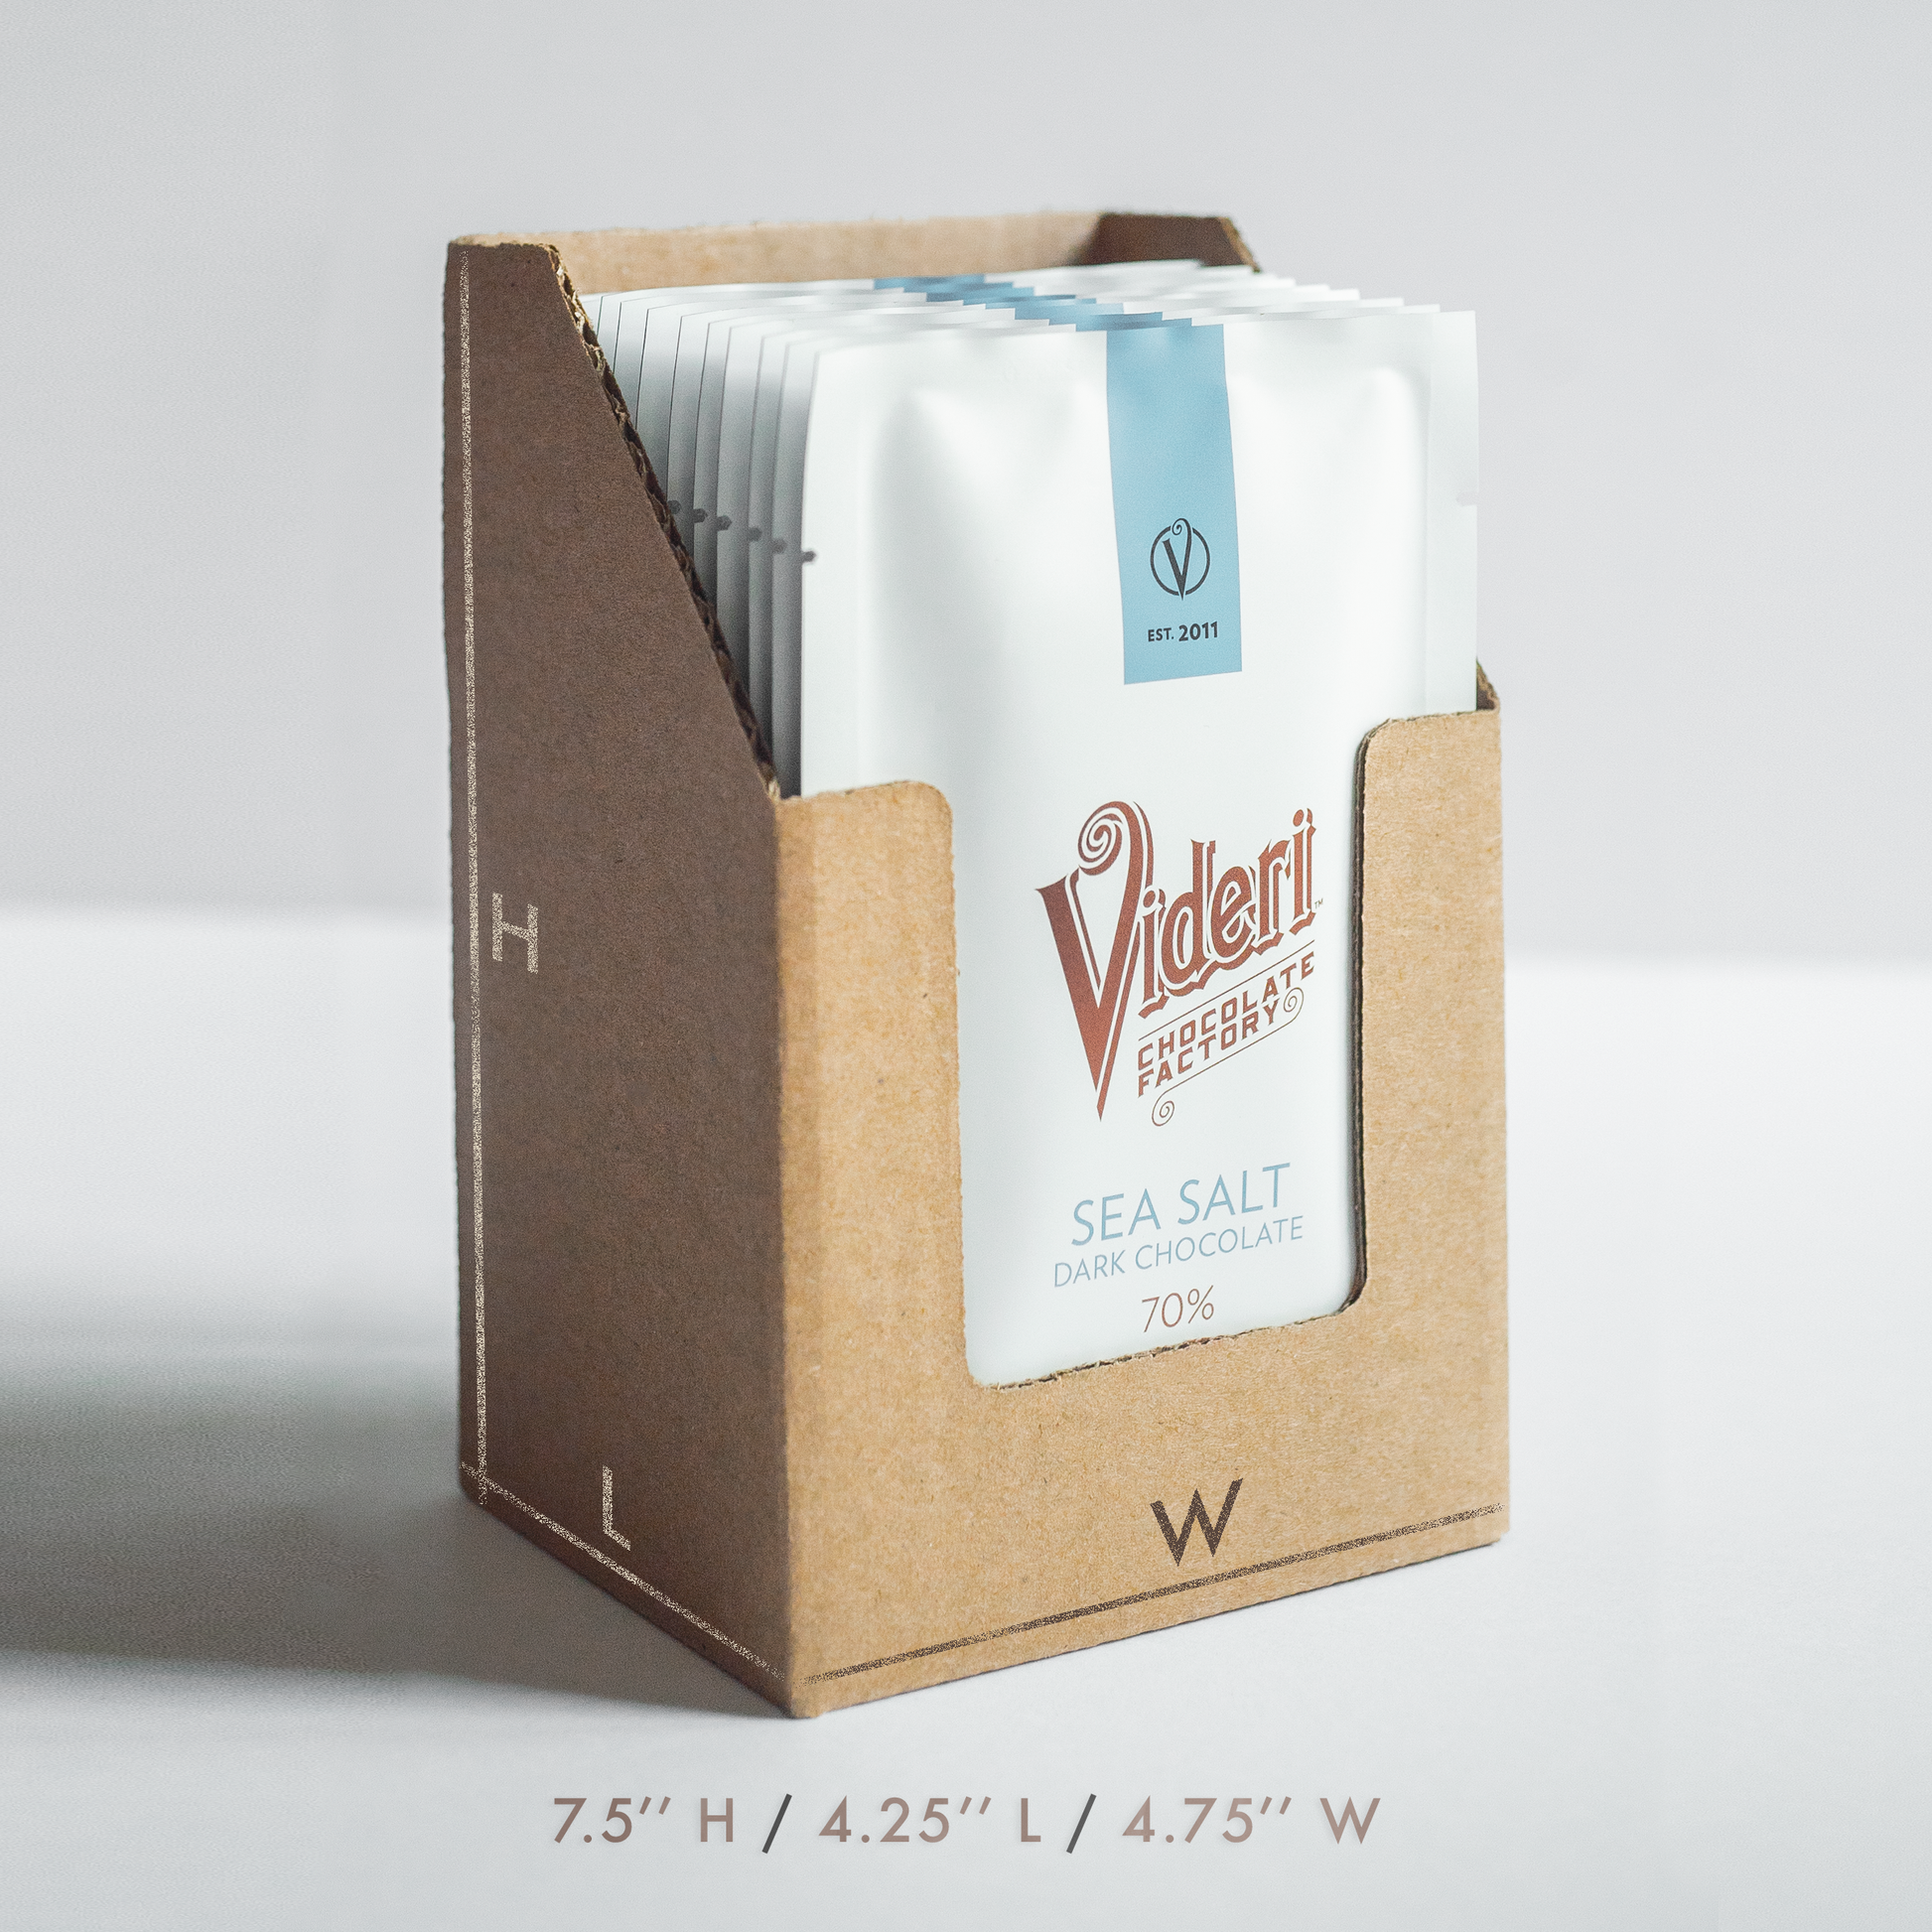 Videri Classic 70% Sea Salt with Dark Chocolate Bar  Videri Chocolate Factory   -better made easy-eco-friendly-sustainable-gifting